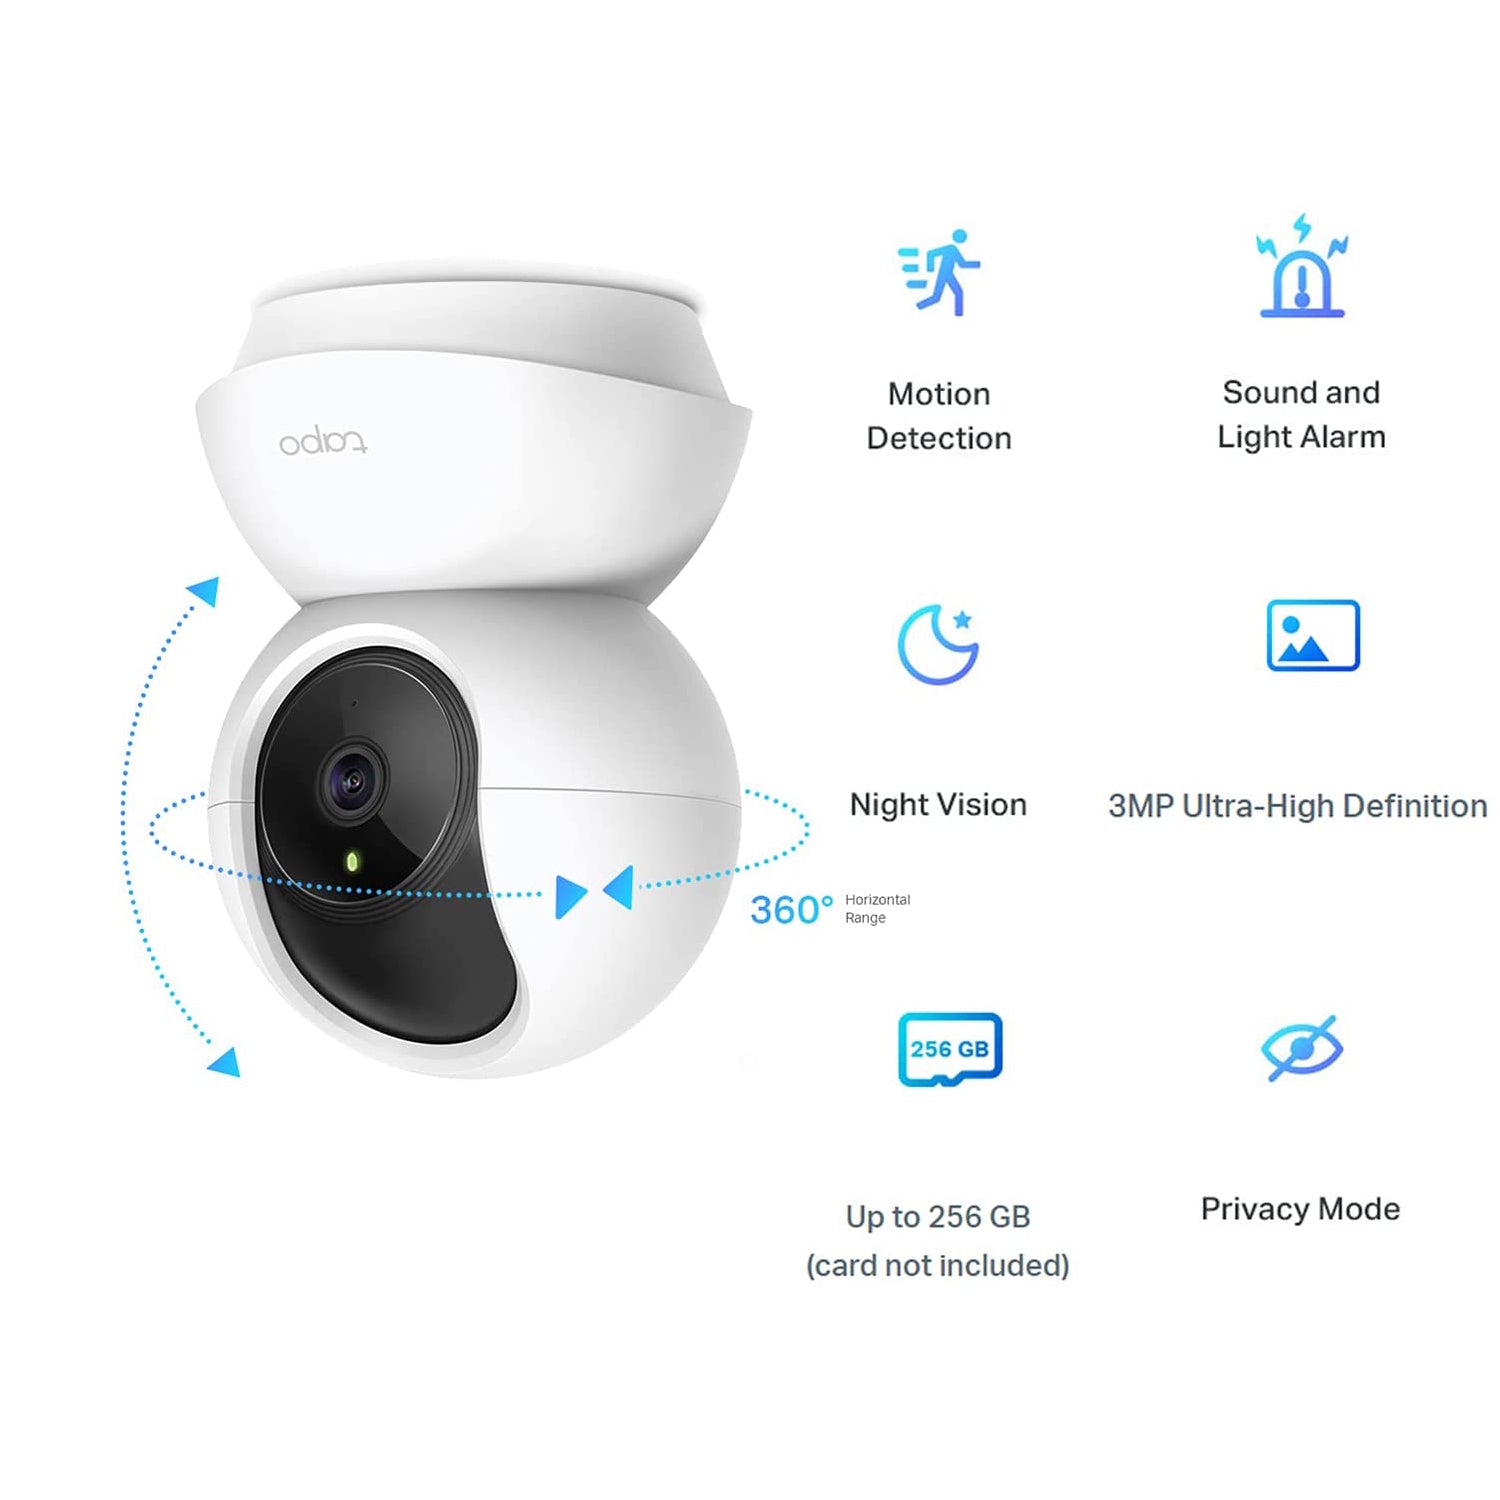 Tapo Pan/Tilt Smart Security Camera 360°, 3MP High Definition, 2-way A